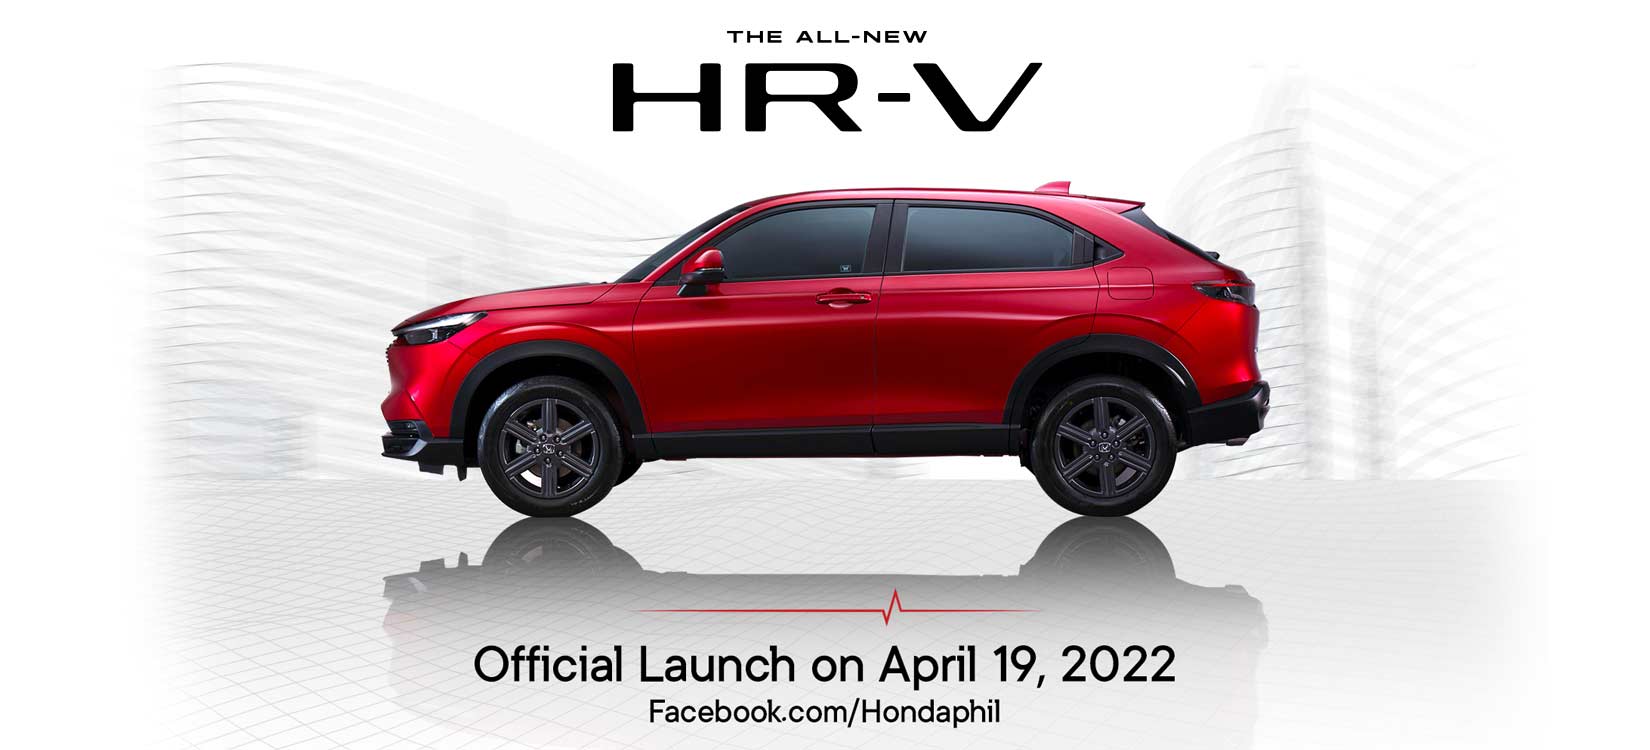 All-New Honda HR-V all set for Philippine launch on April 19